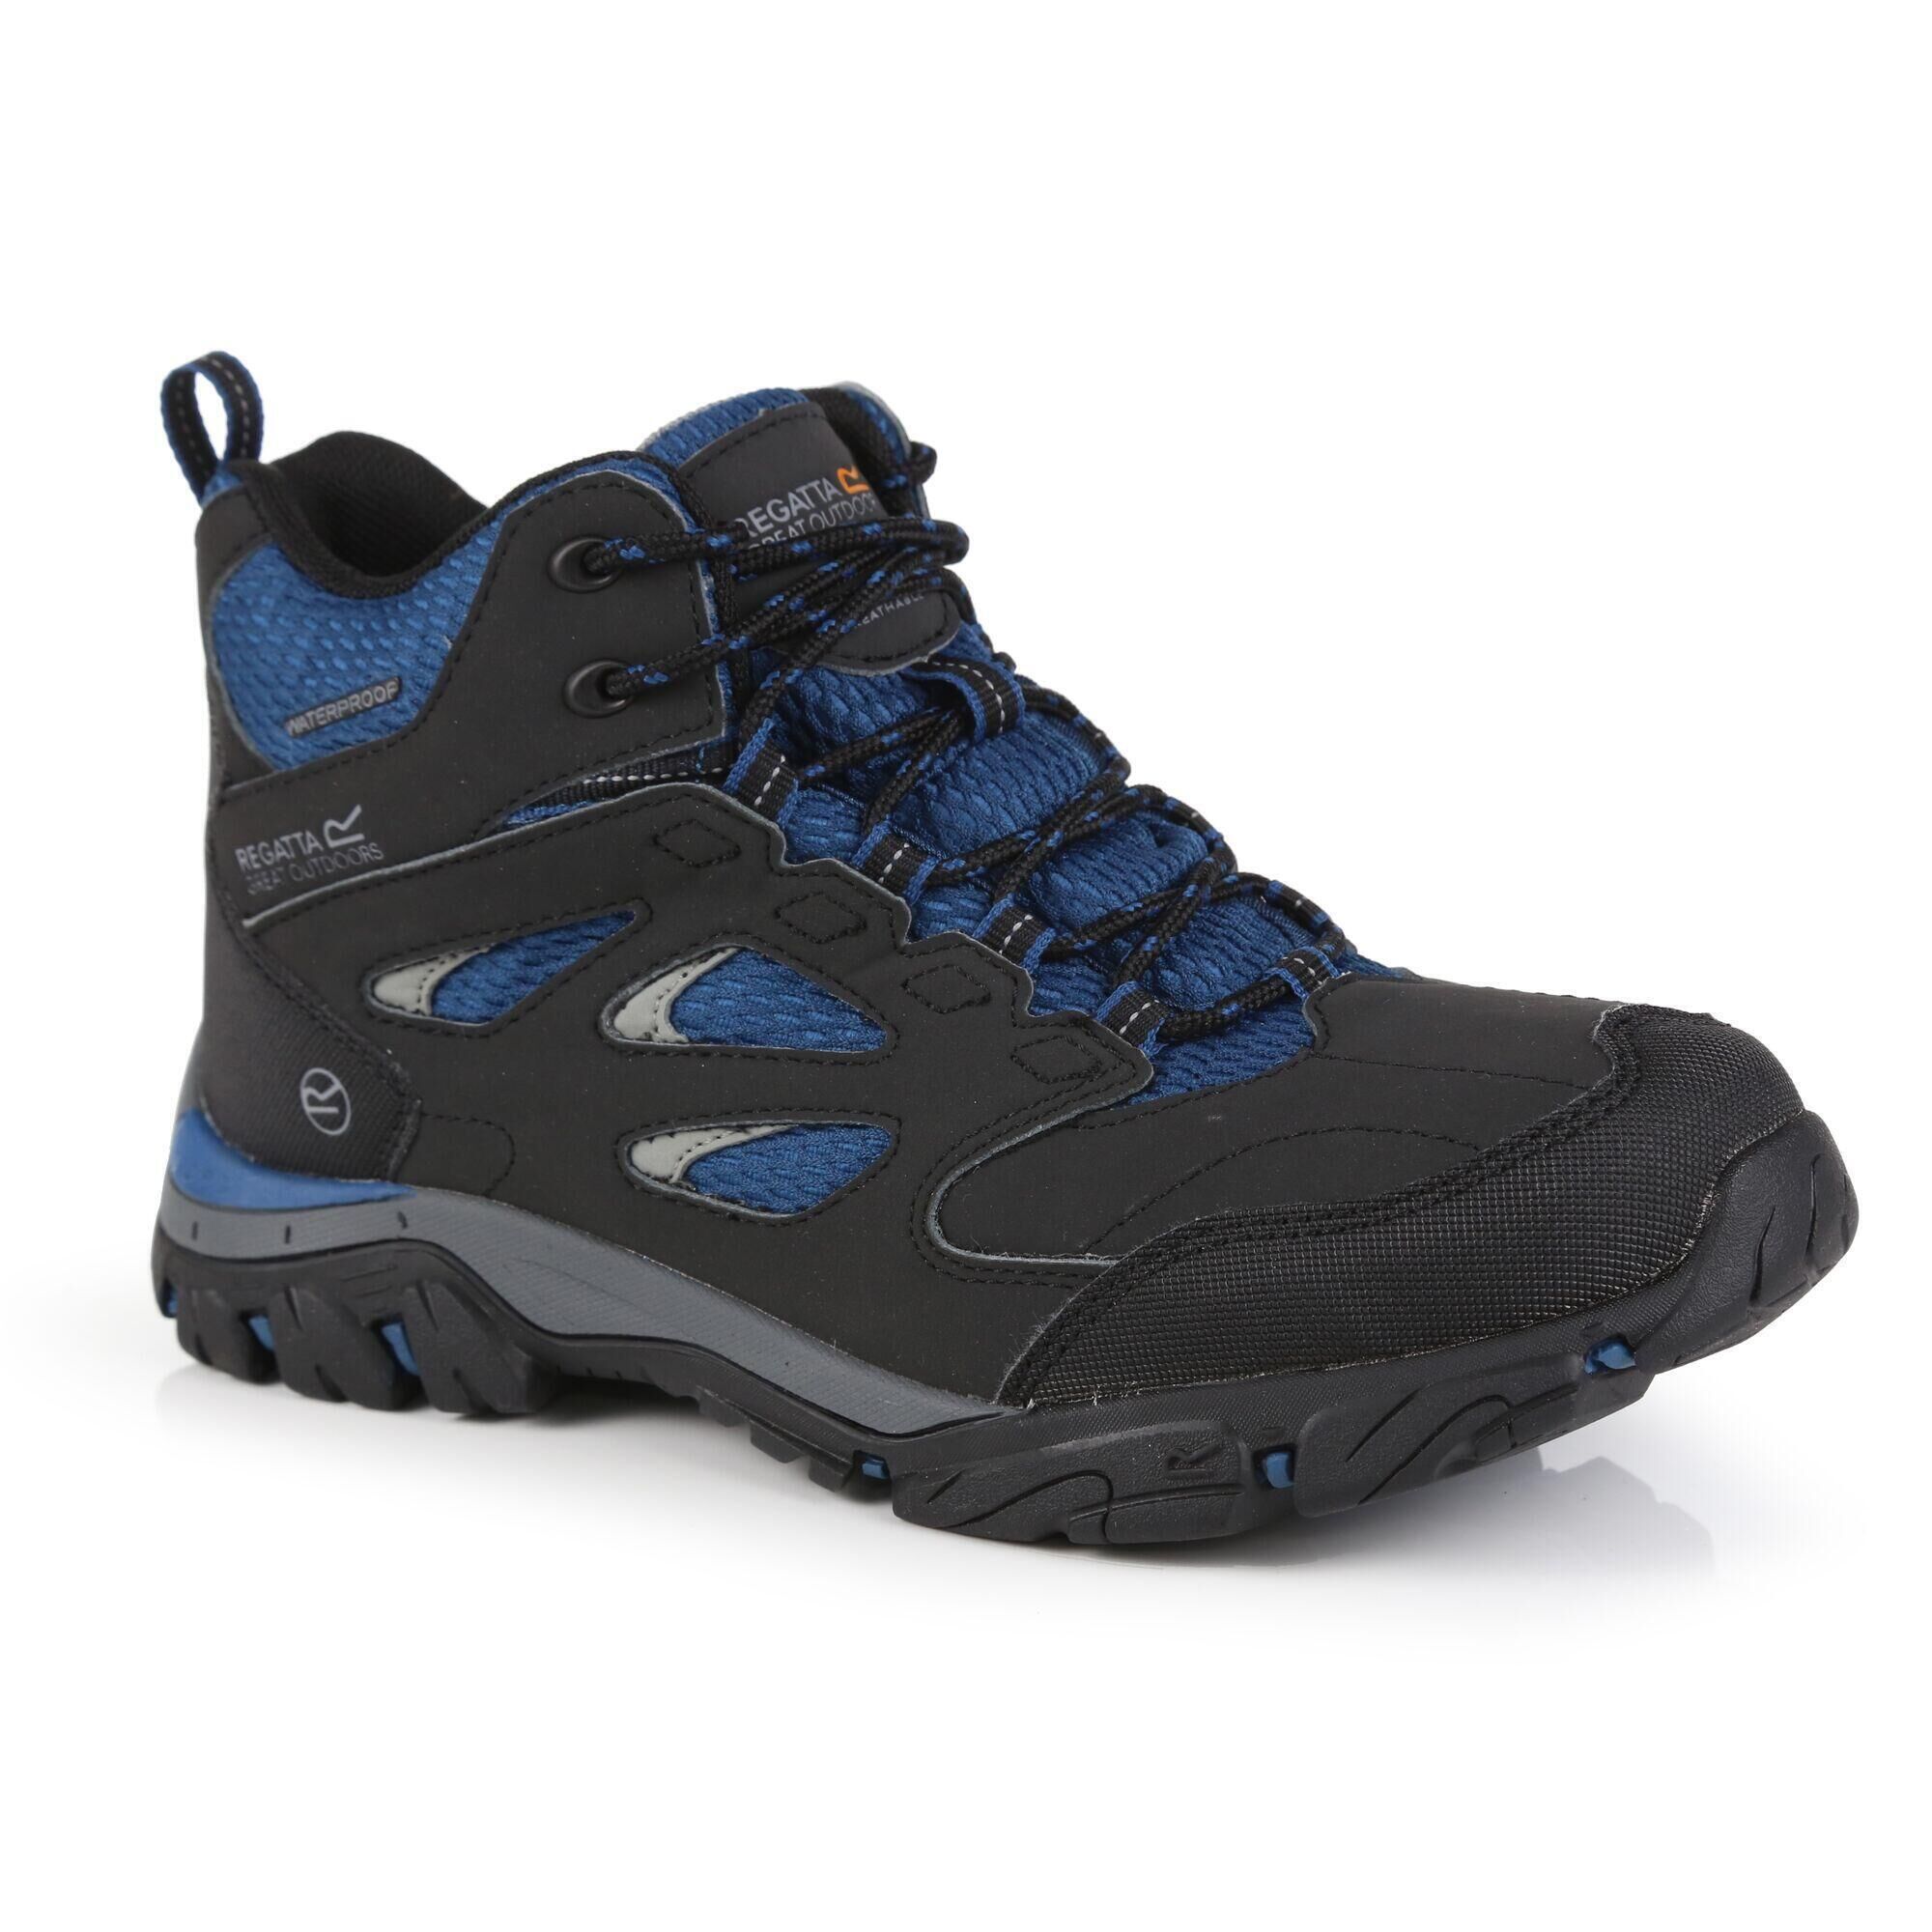 REGATTA Lady Holcombe IEP Mid Women's Hiking Boots - Ash Grey / Blue